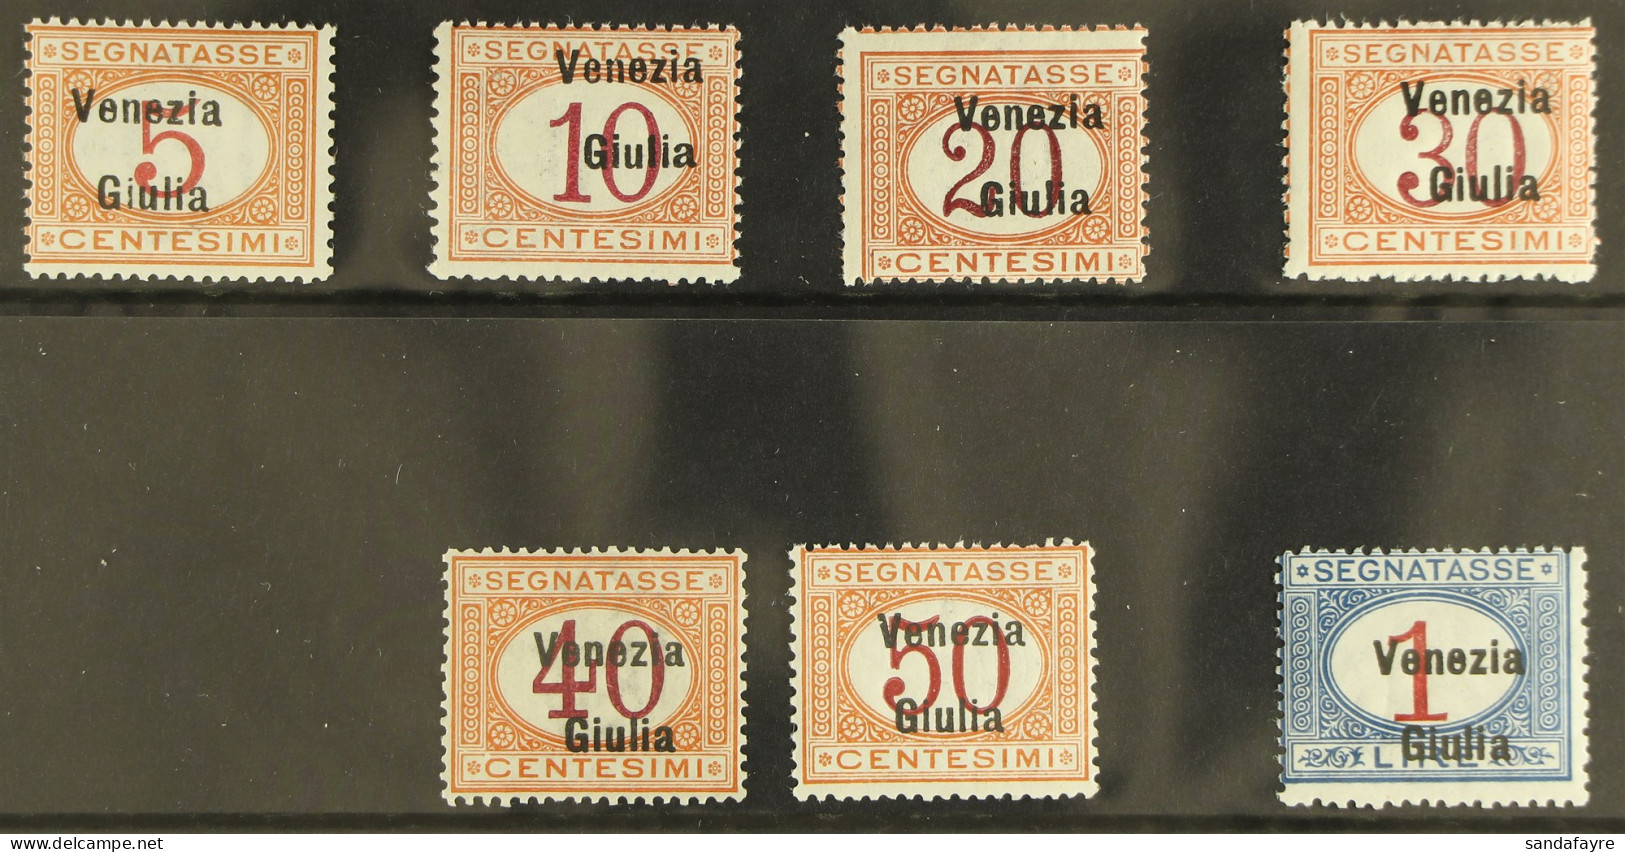 VENEZIA GIULIA Postage Due 1918 Complete Set, Sassone S4, Never Hinged Mint. Cat. ??2500 (7 Stamps) - Non Classificati